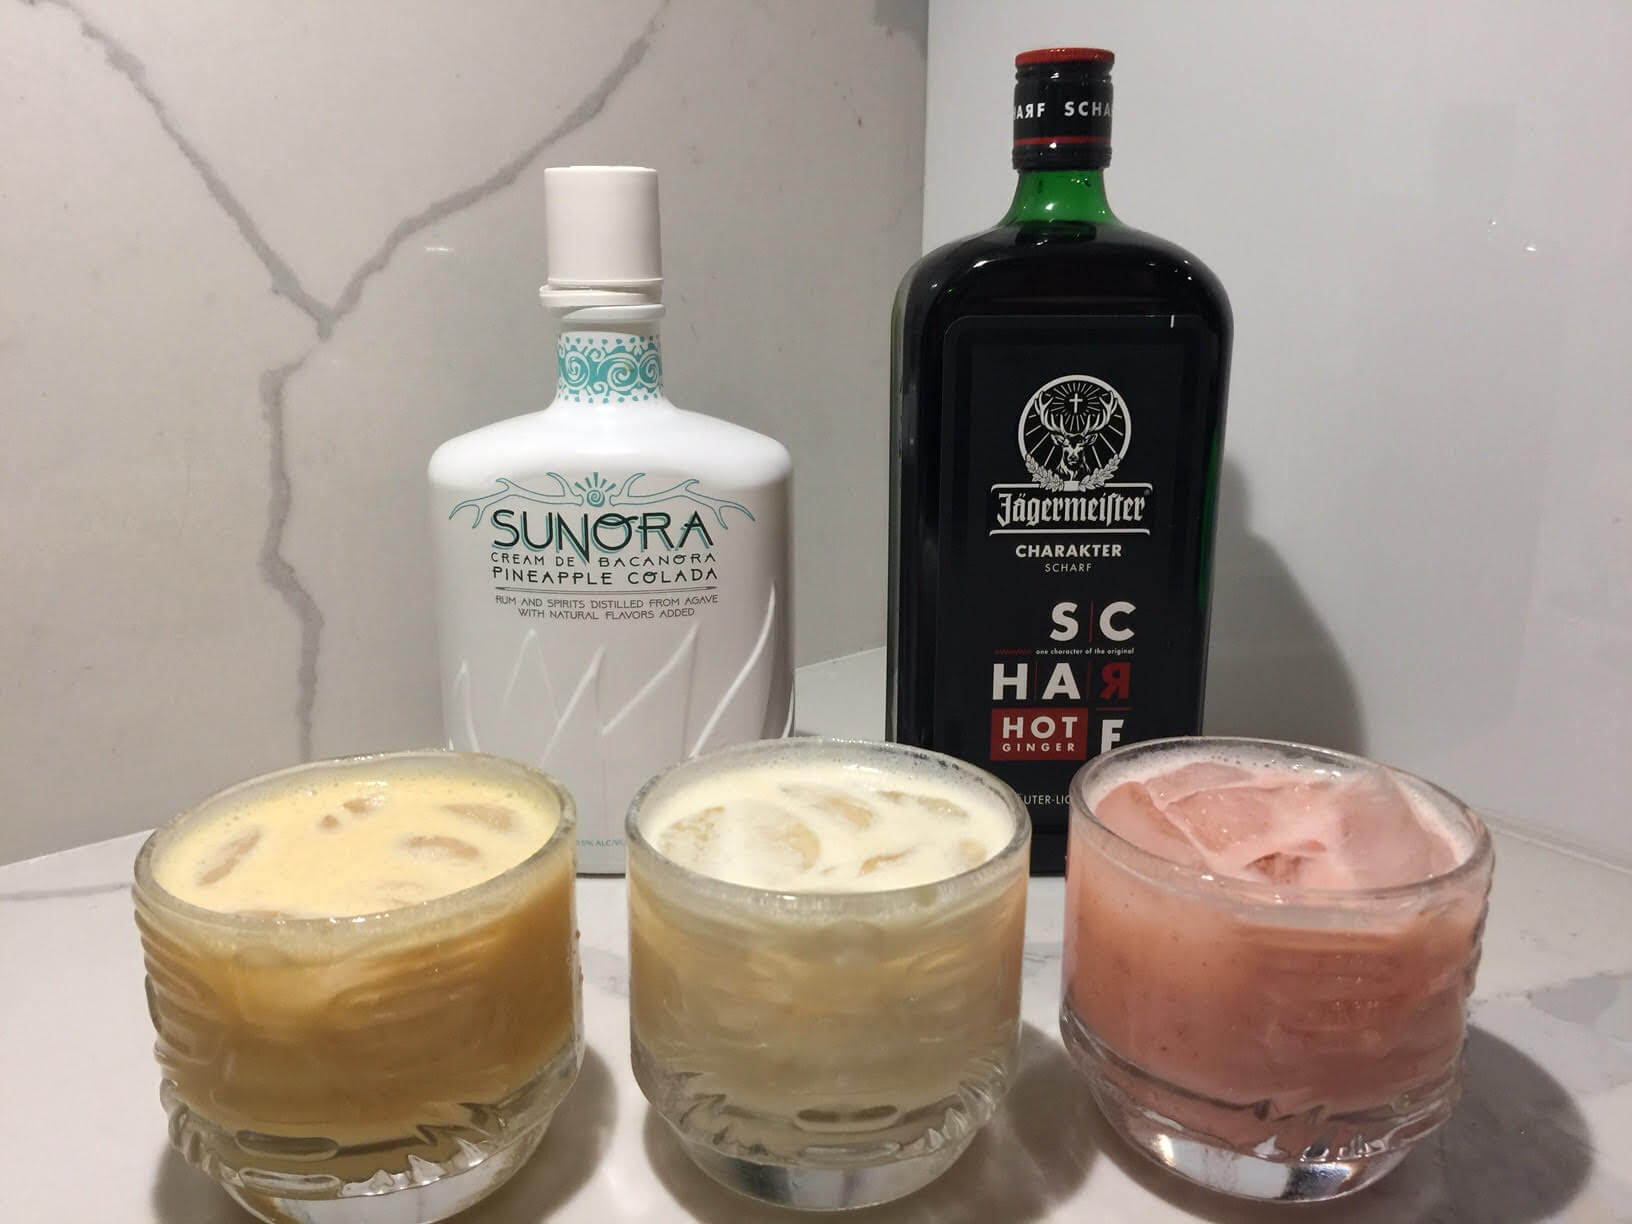 Sunora Cream De Bacanora Pineapple Colada & Jägermeister SCHARF Cocktails!